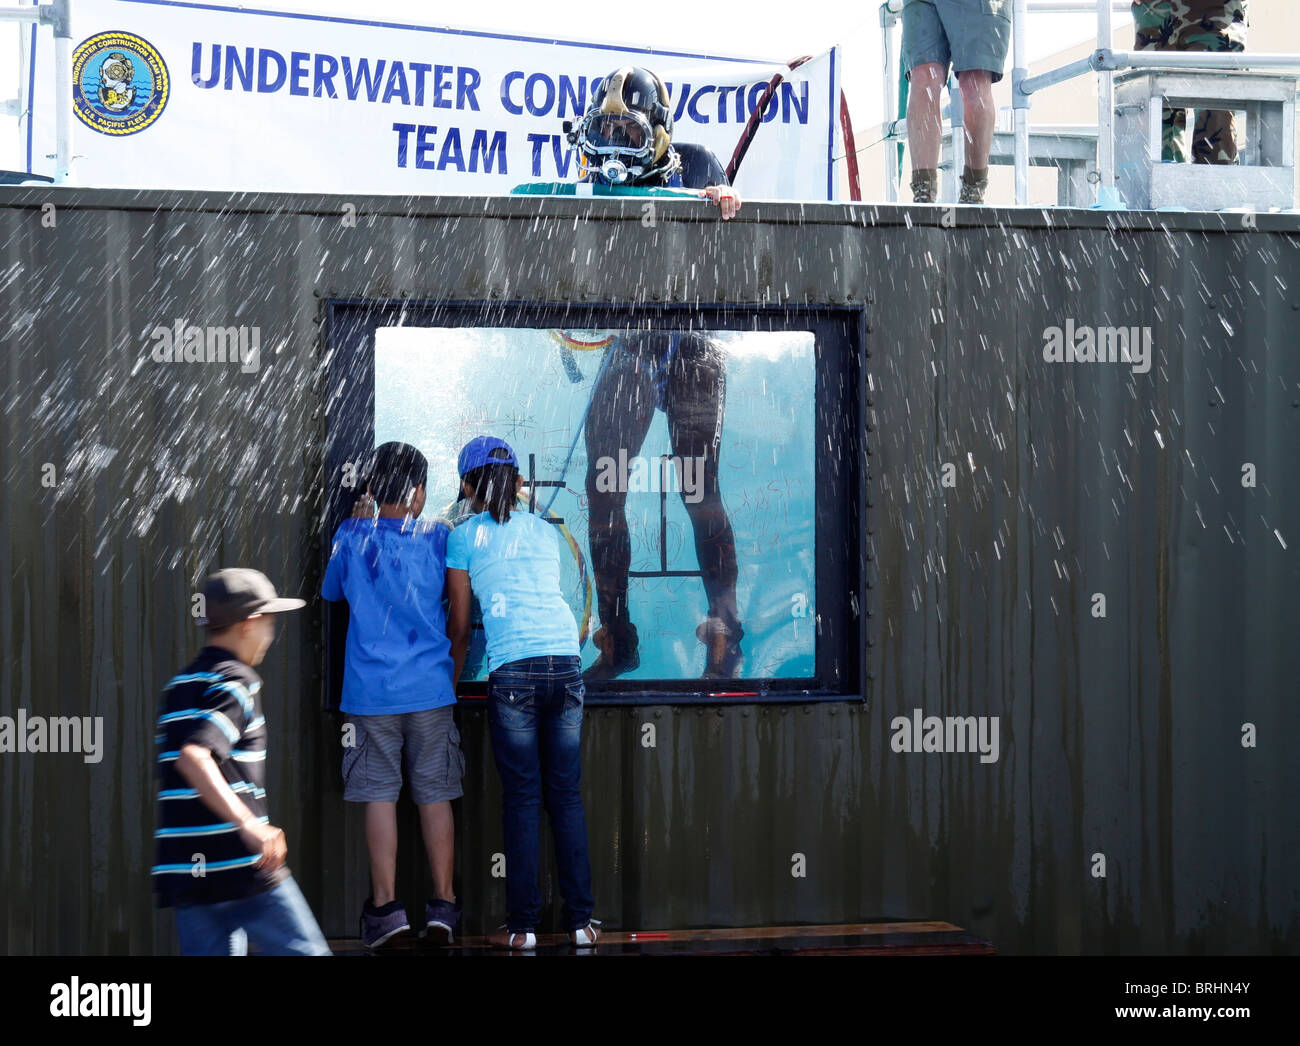 Kids watching US Navy underwater construction team demonstration Stock Photo